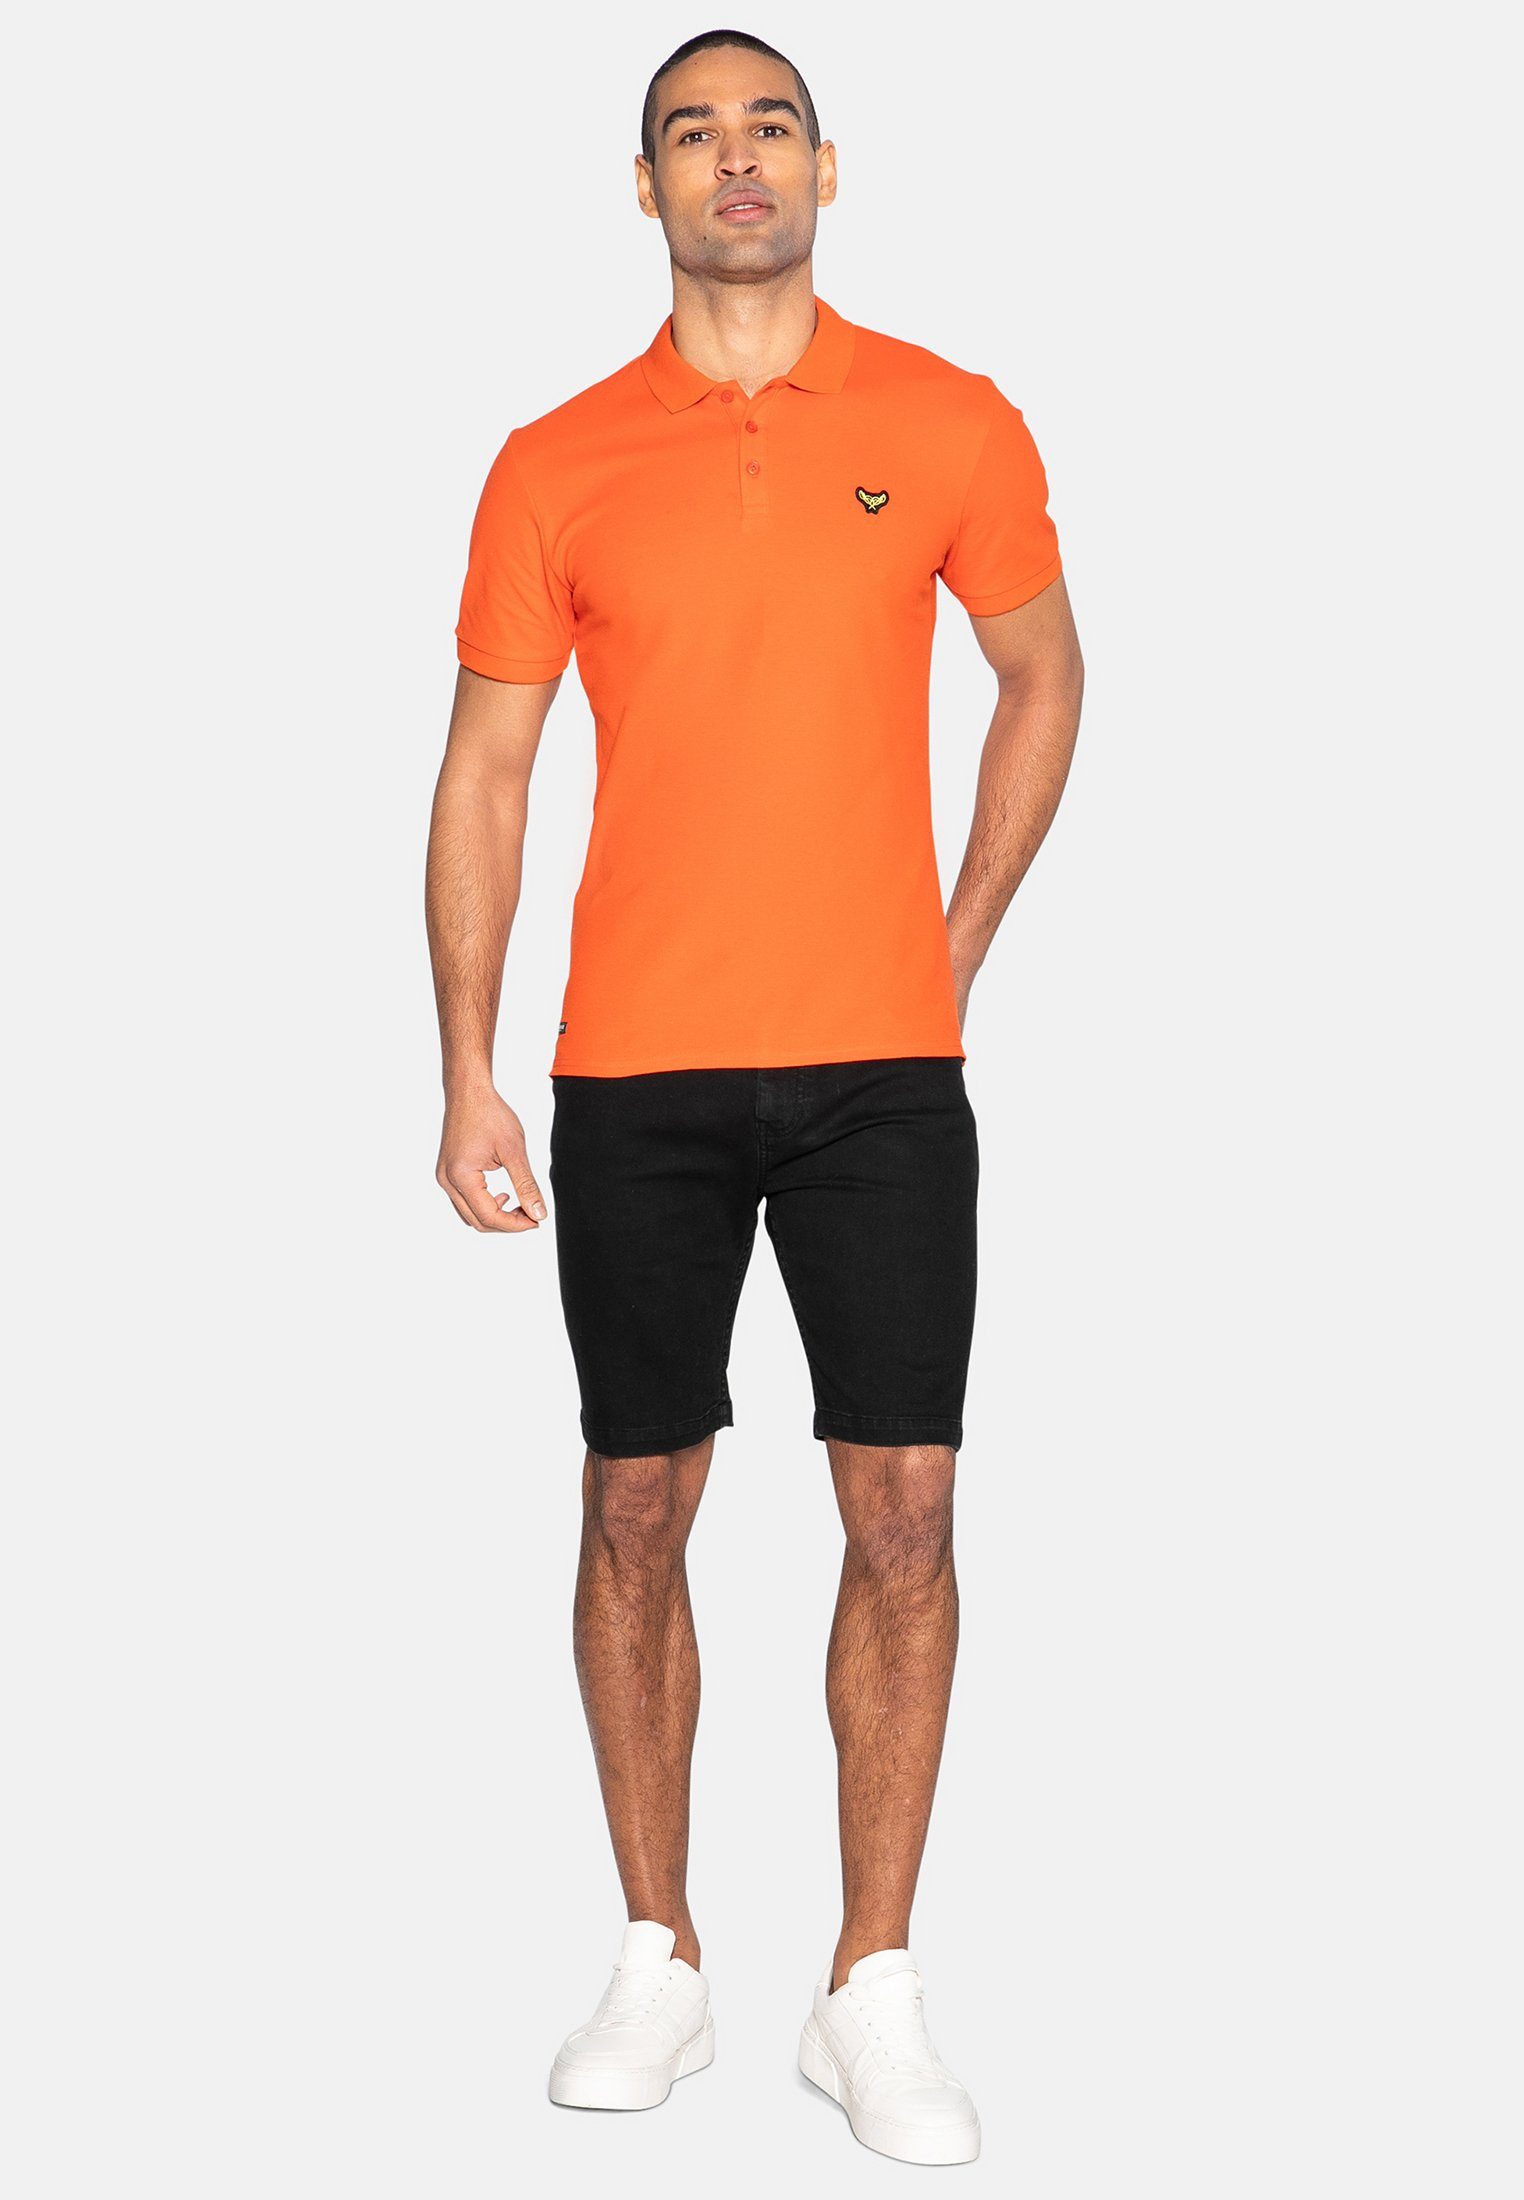 Samson Orange Poloshirt Threadbare